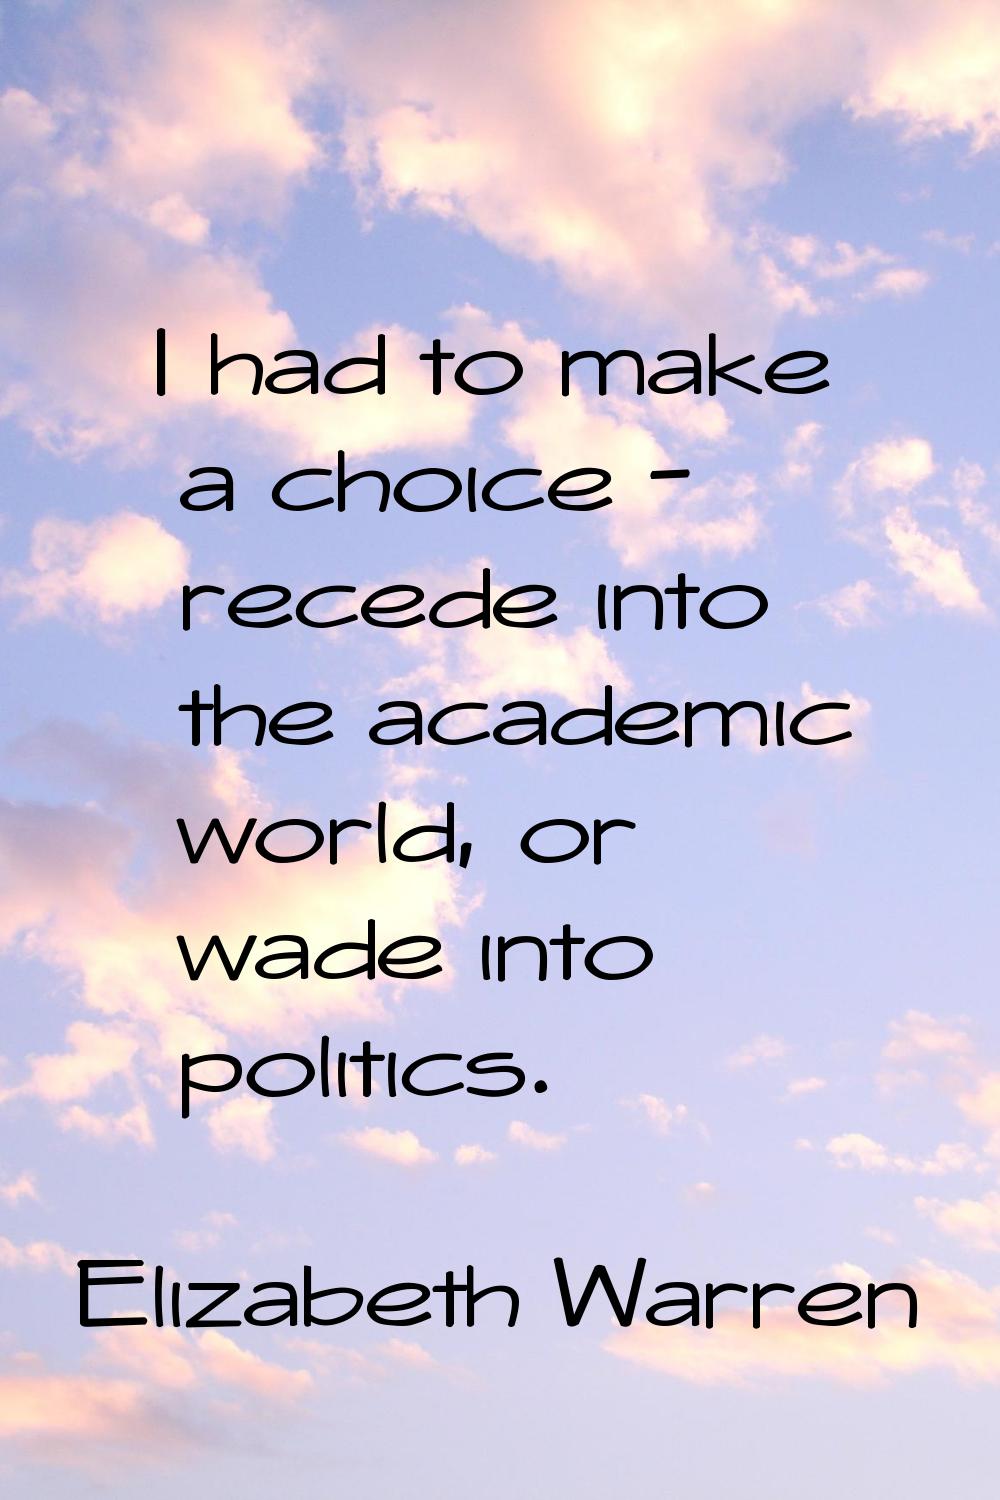 I had to make a choice - recede into the academic world, or wade into politics.